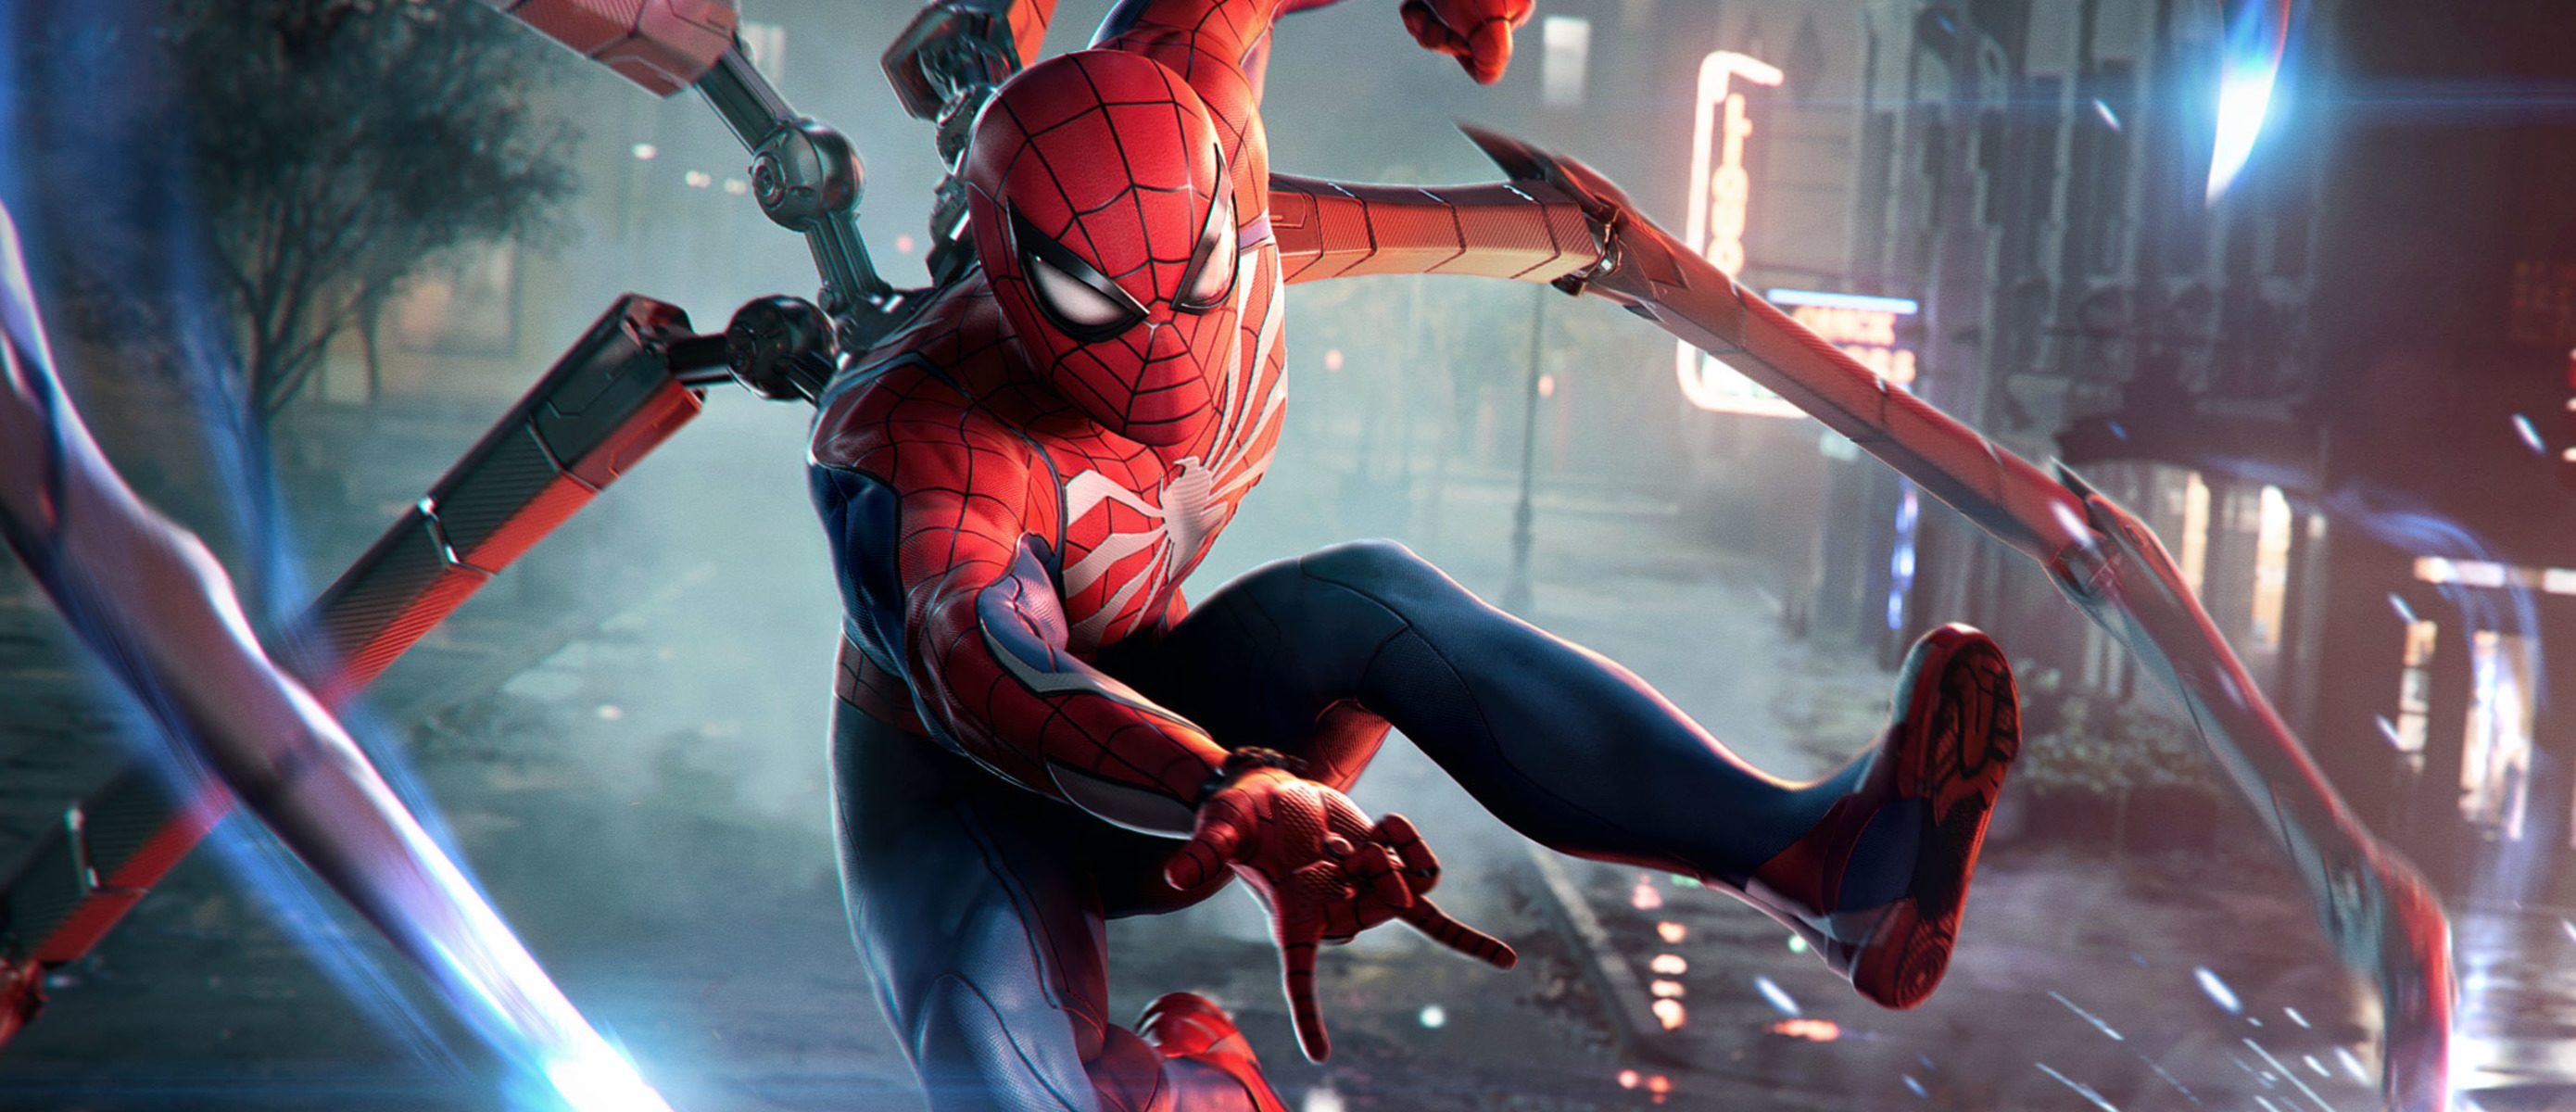 Spider man 2 игра 2023 пк. Marvel Spider man игра. Marvel`s Spider-man 2. Пс5 Спайдер Мэн 2. Marvel Spider man 2 ps5 2023.